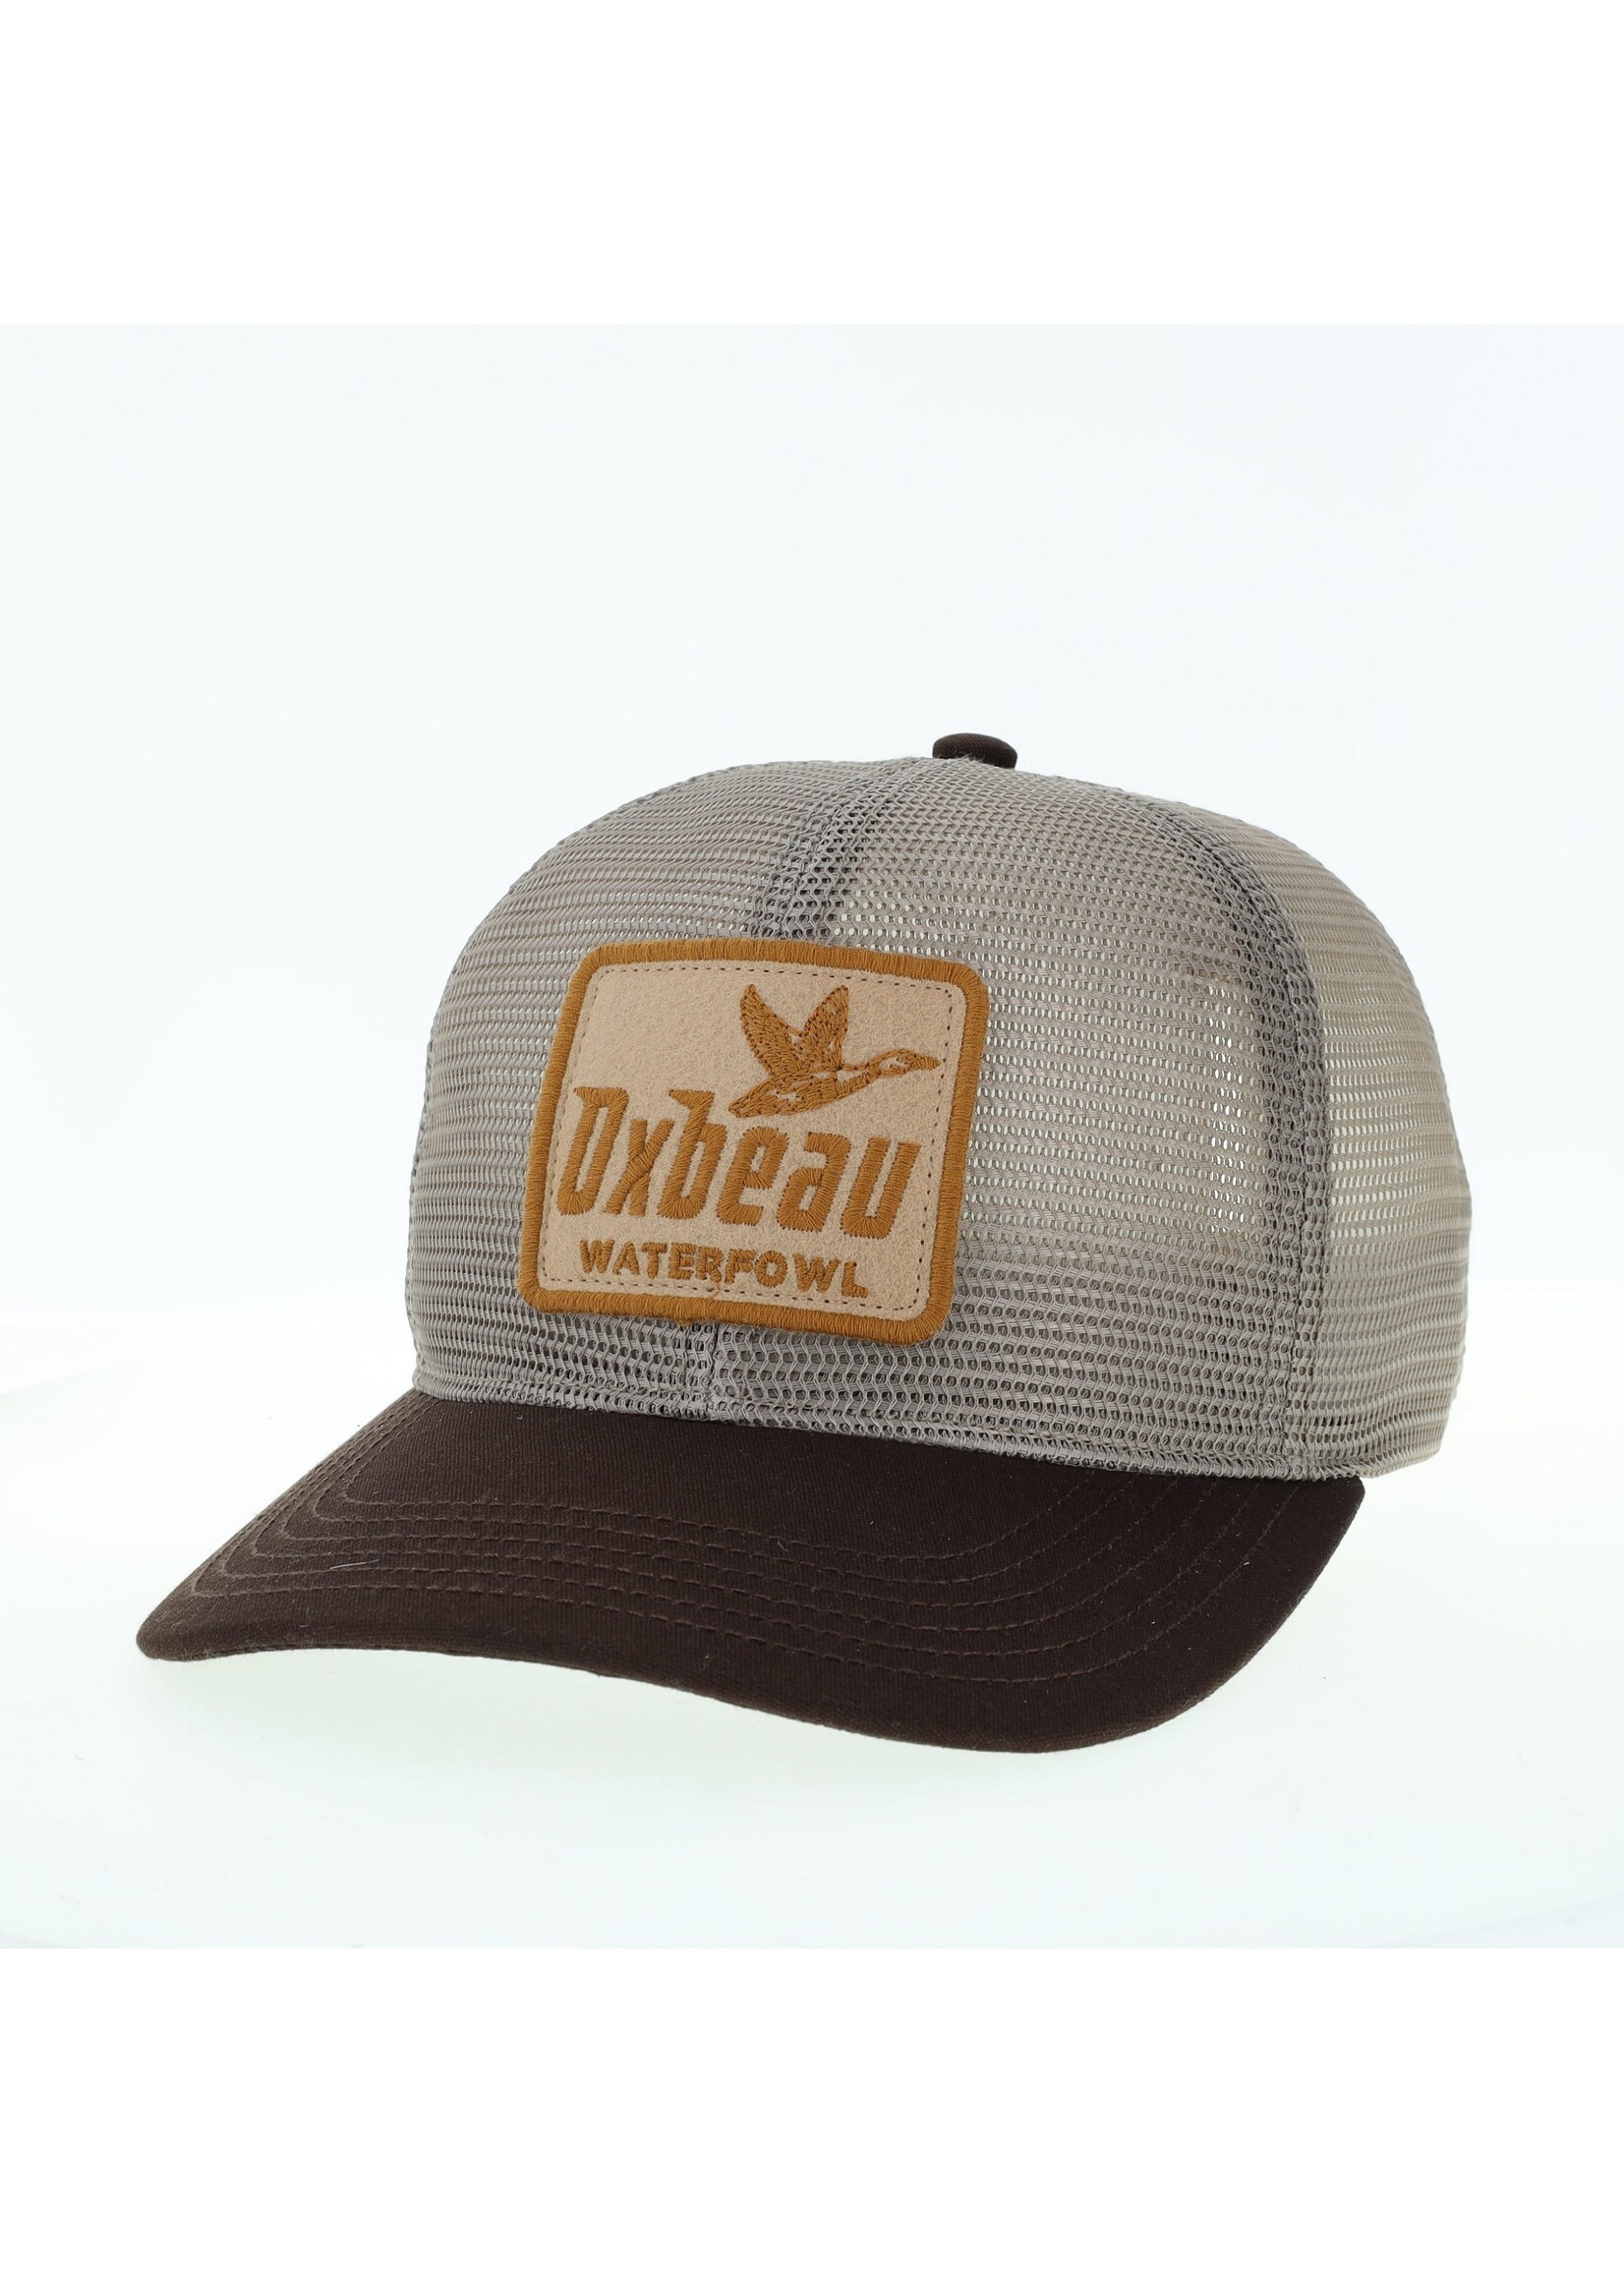 Oxbeau Oxbeau Waterfowl Meshy Patch Hat